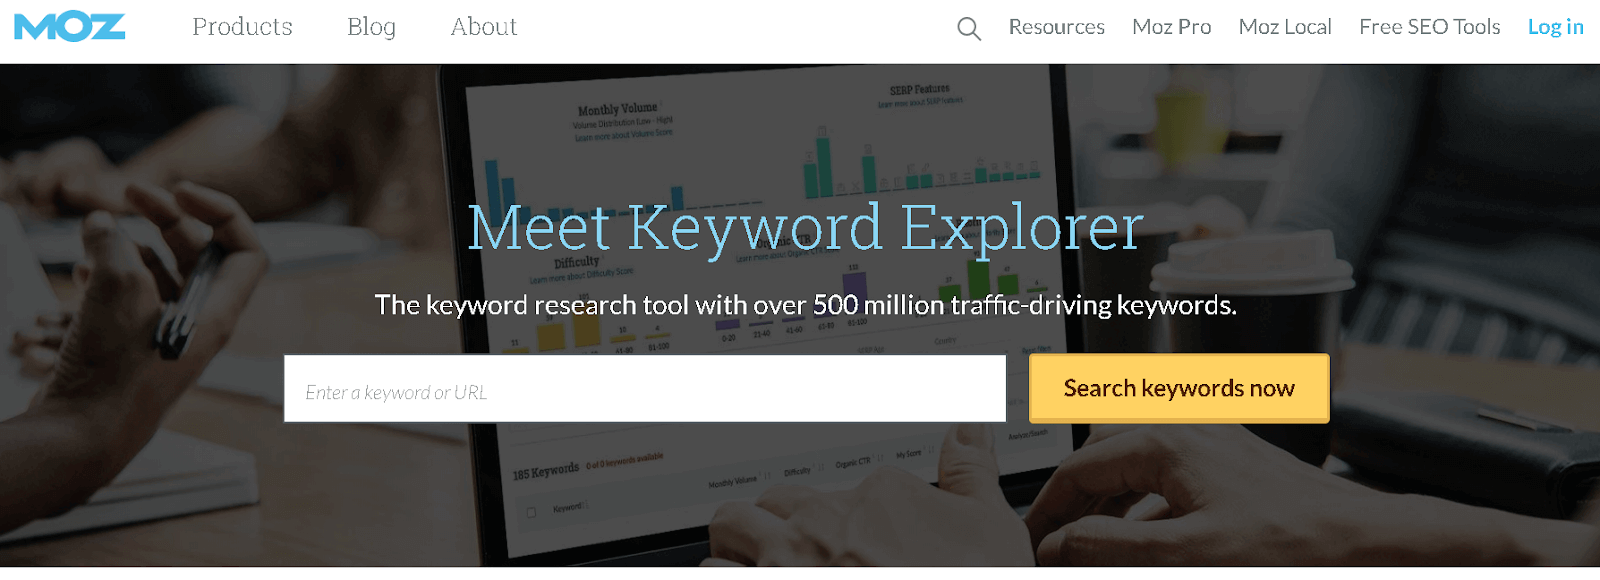 Keyword Explorer_ Moz's Keyword Research Tool